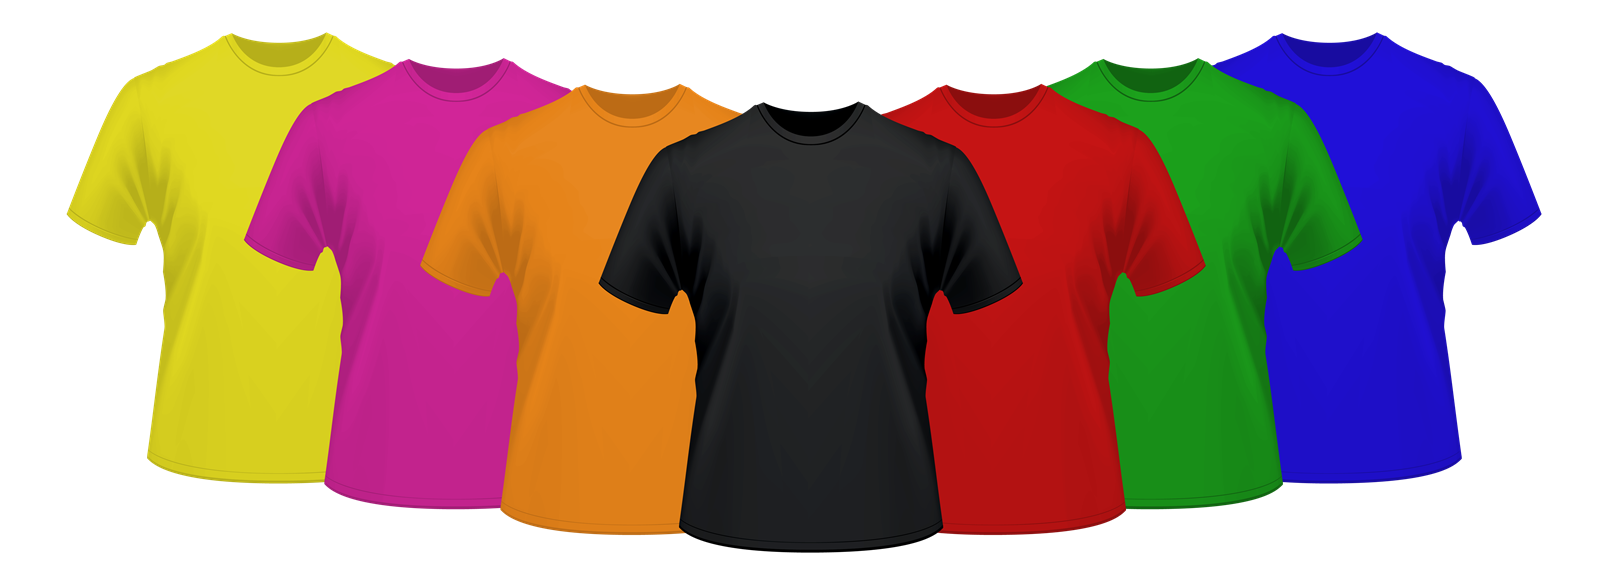 Blank T-Shirt PNG Image Transparent